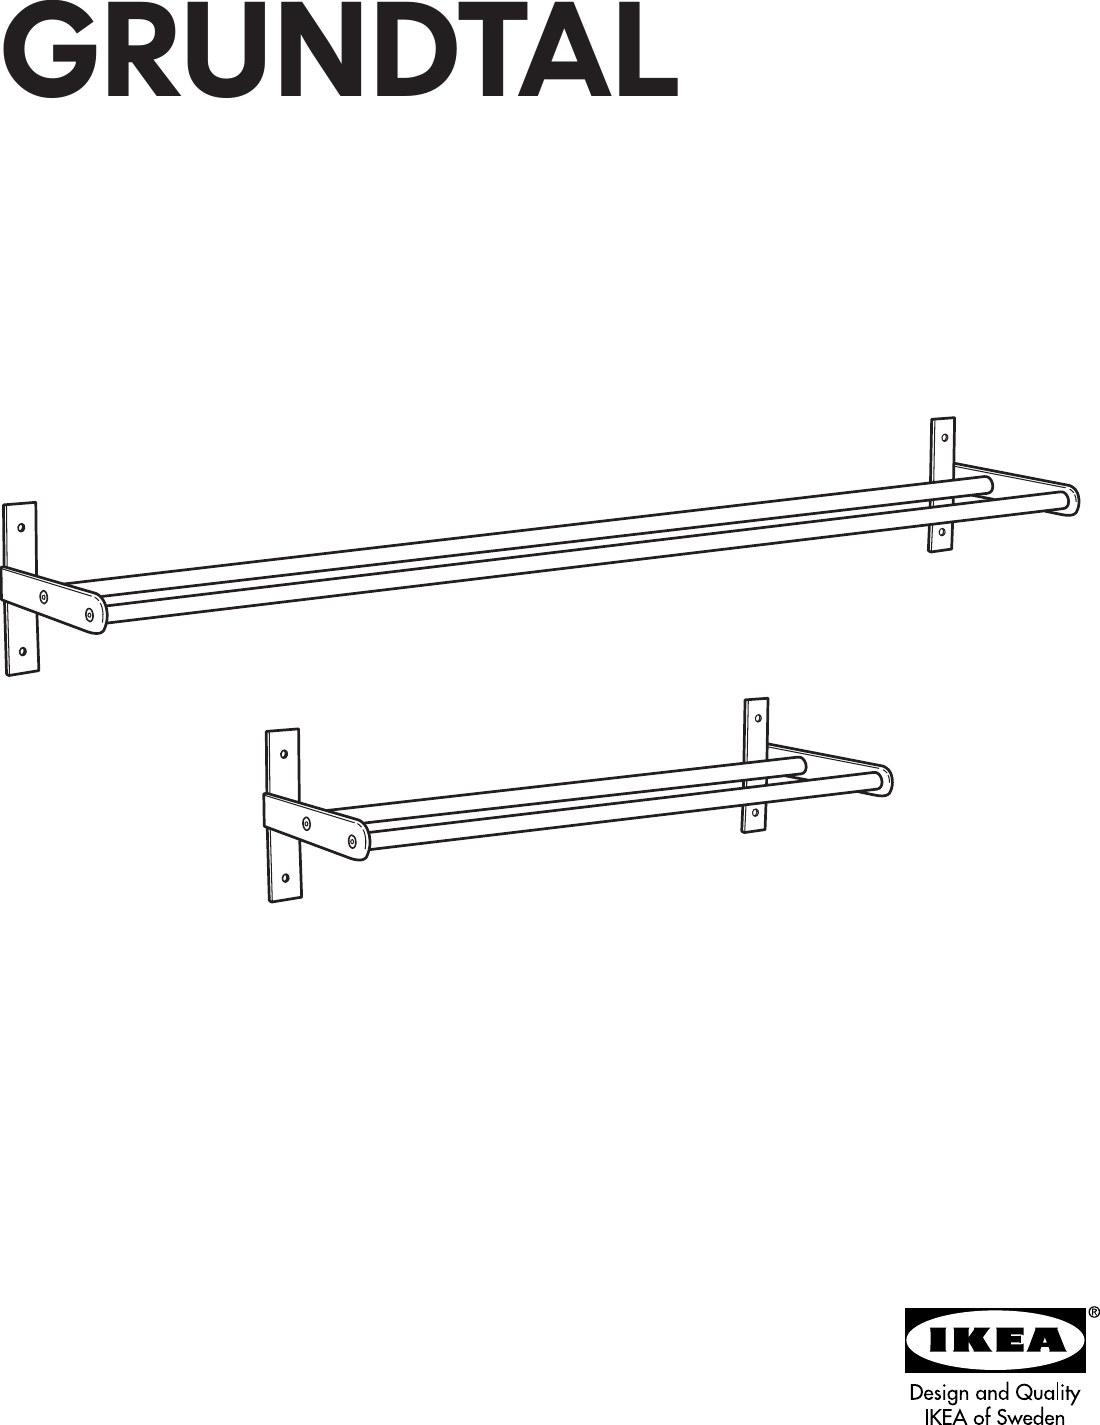 Page 1 of 4 - Ikea Ikea-Grundtal-Towel-Rail-31-1-2-Assembly-Instruction